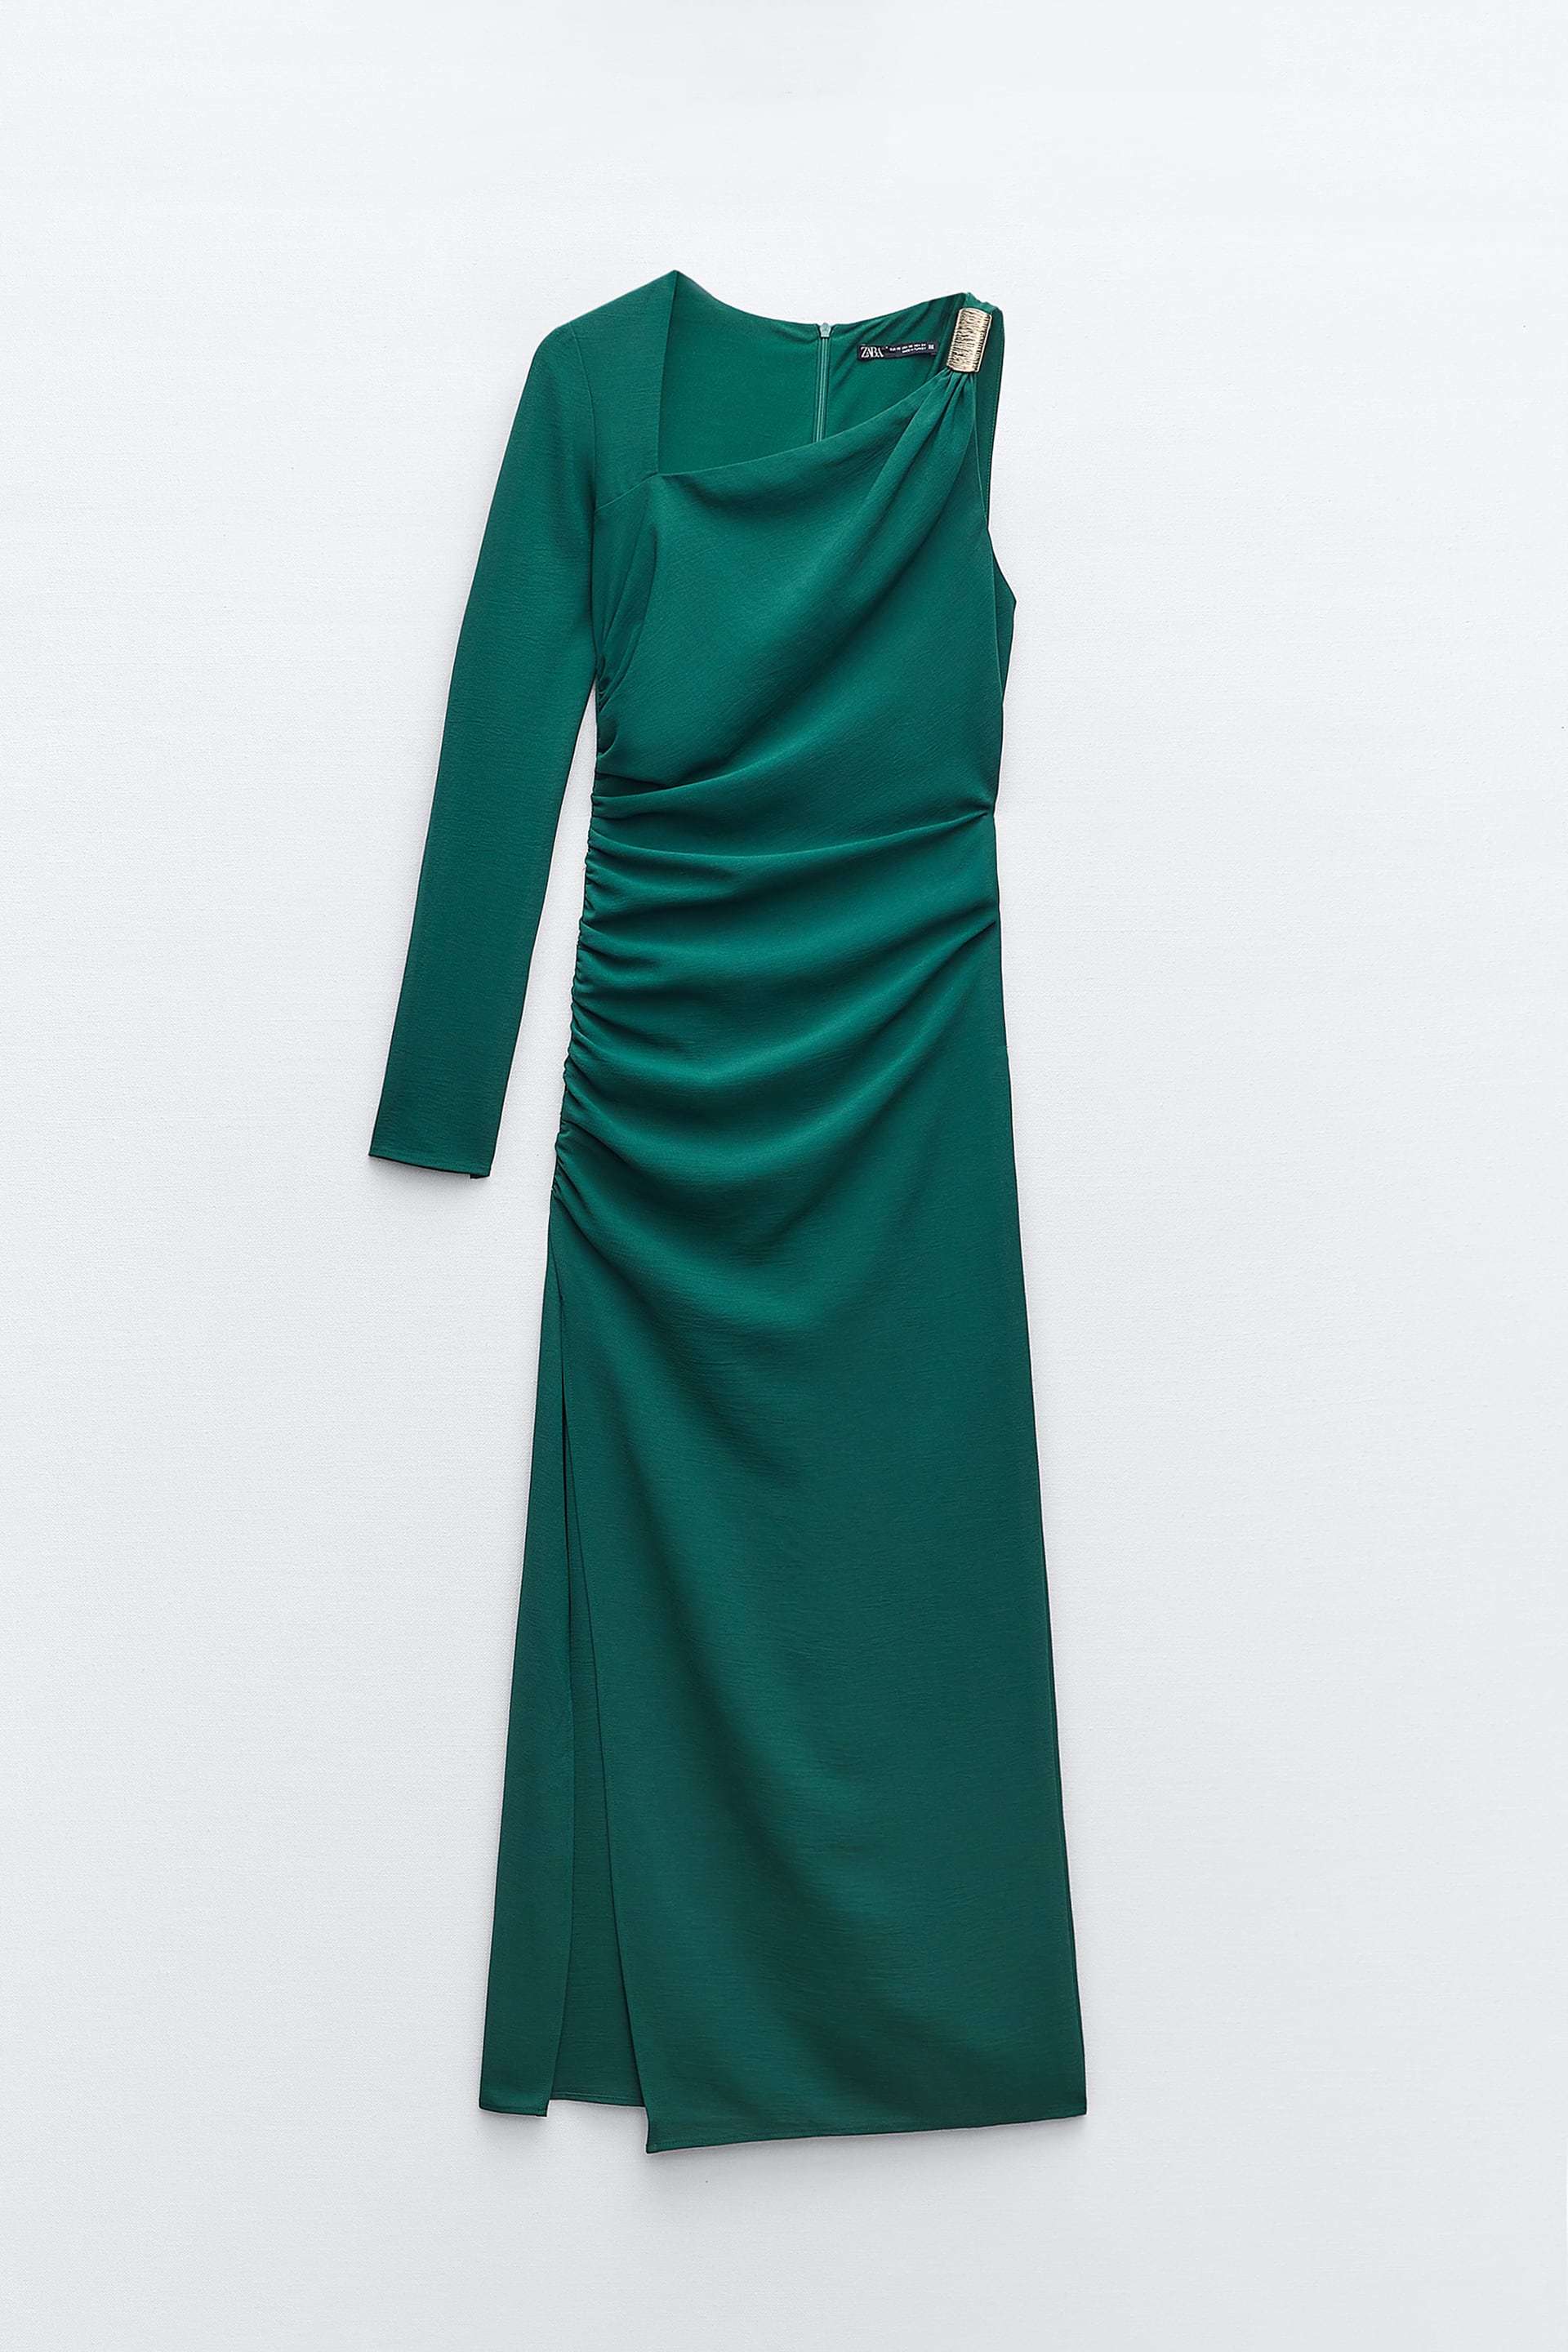 Vestido verde asimétrico de Zara (35,95 euros).